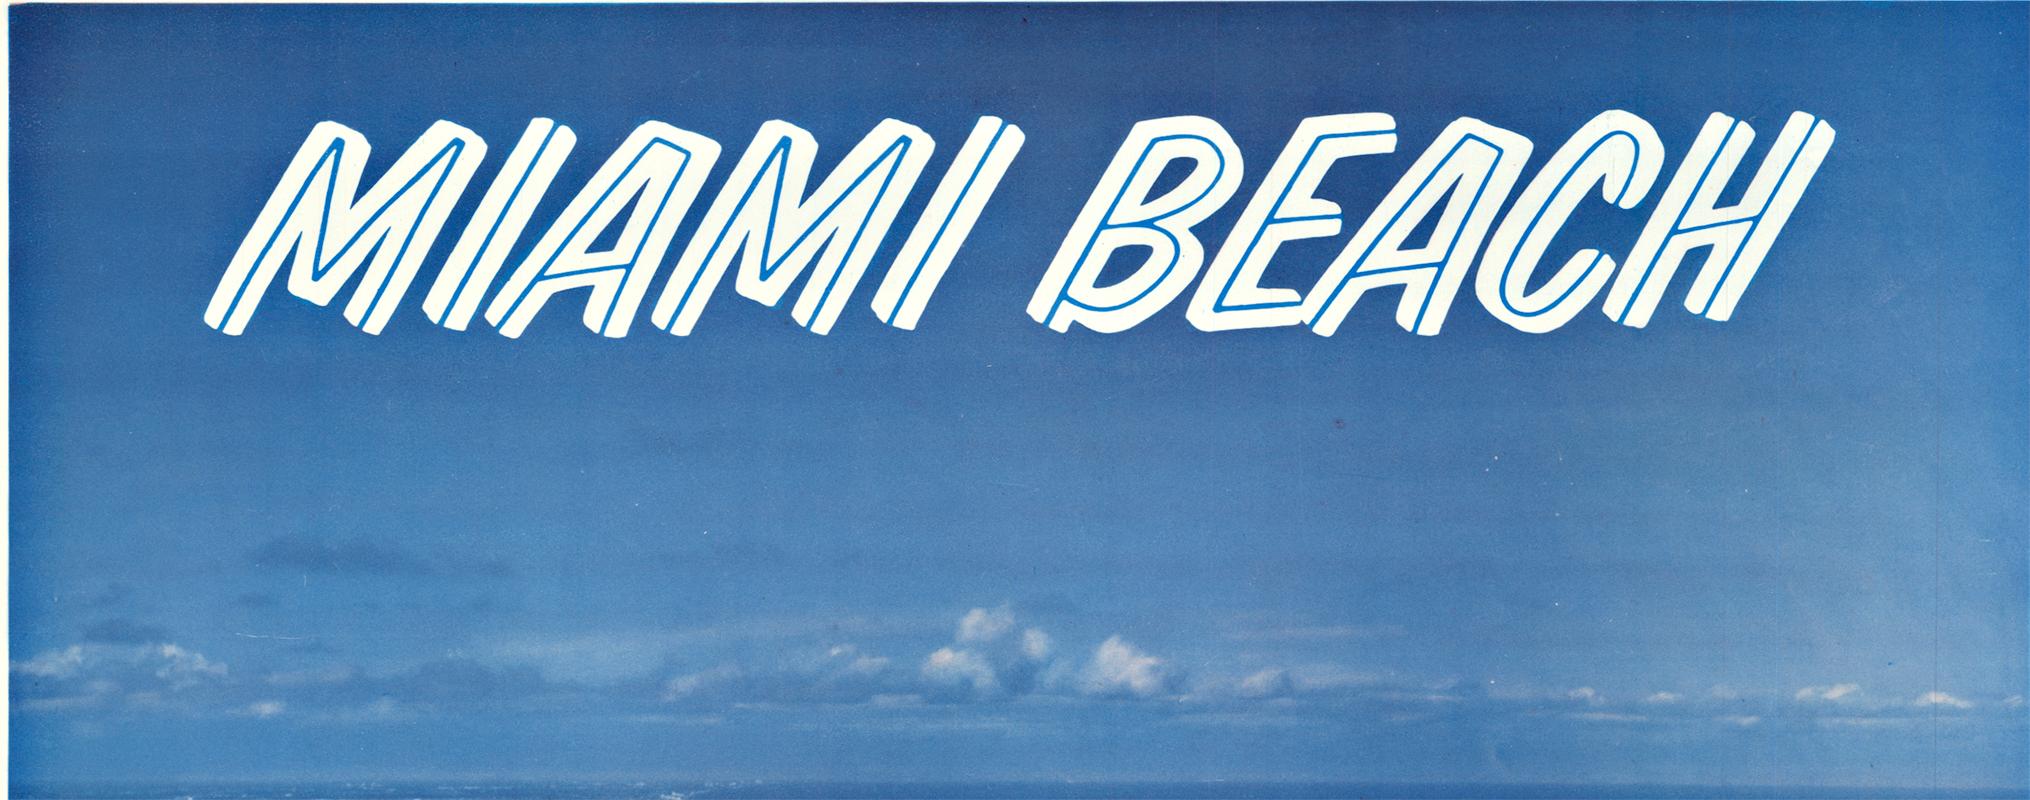 Miami Beach Jet National original vintage travel poster - Print by Unknown